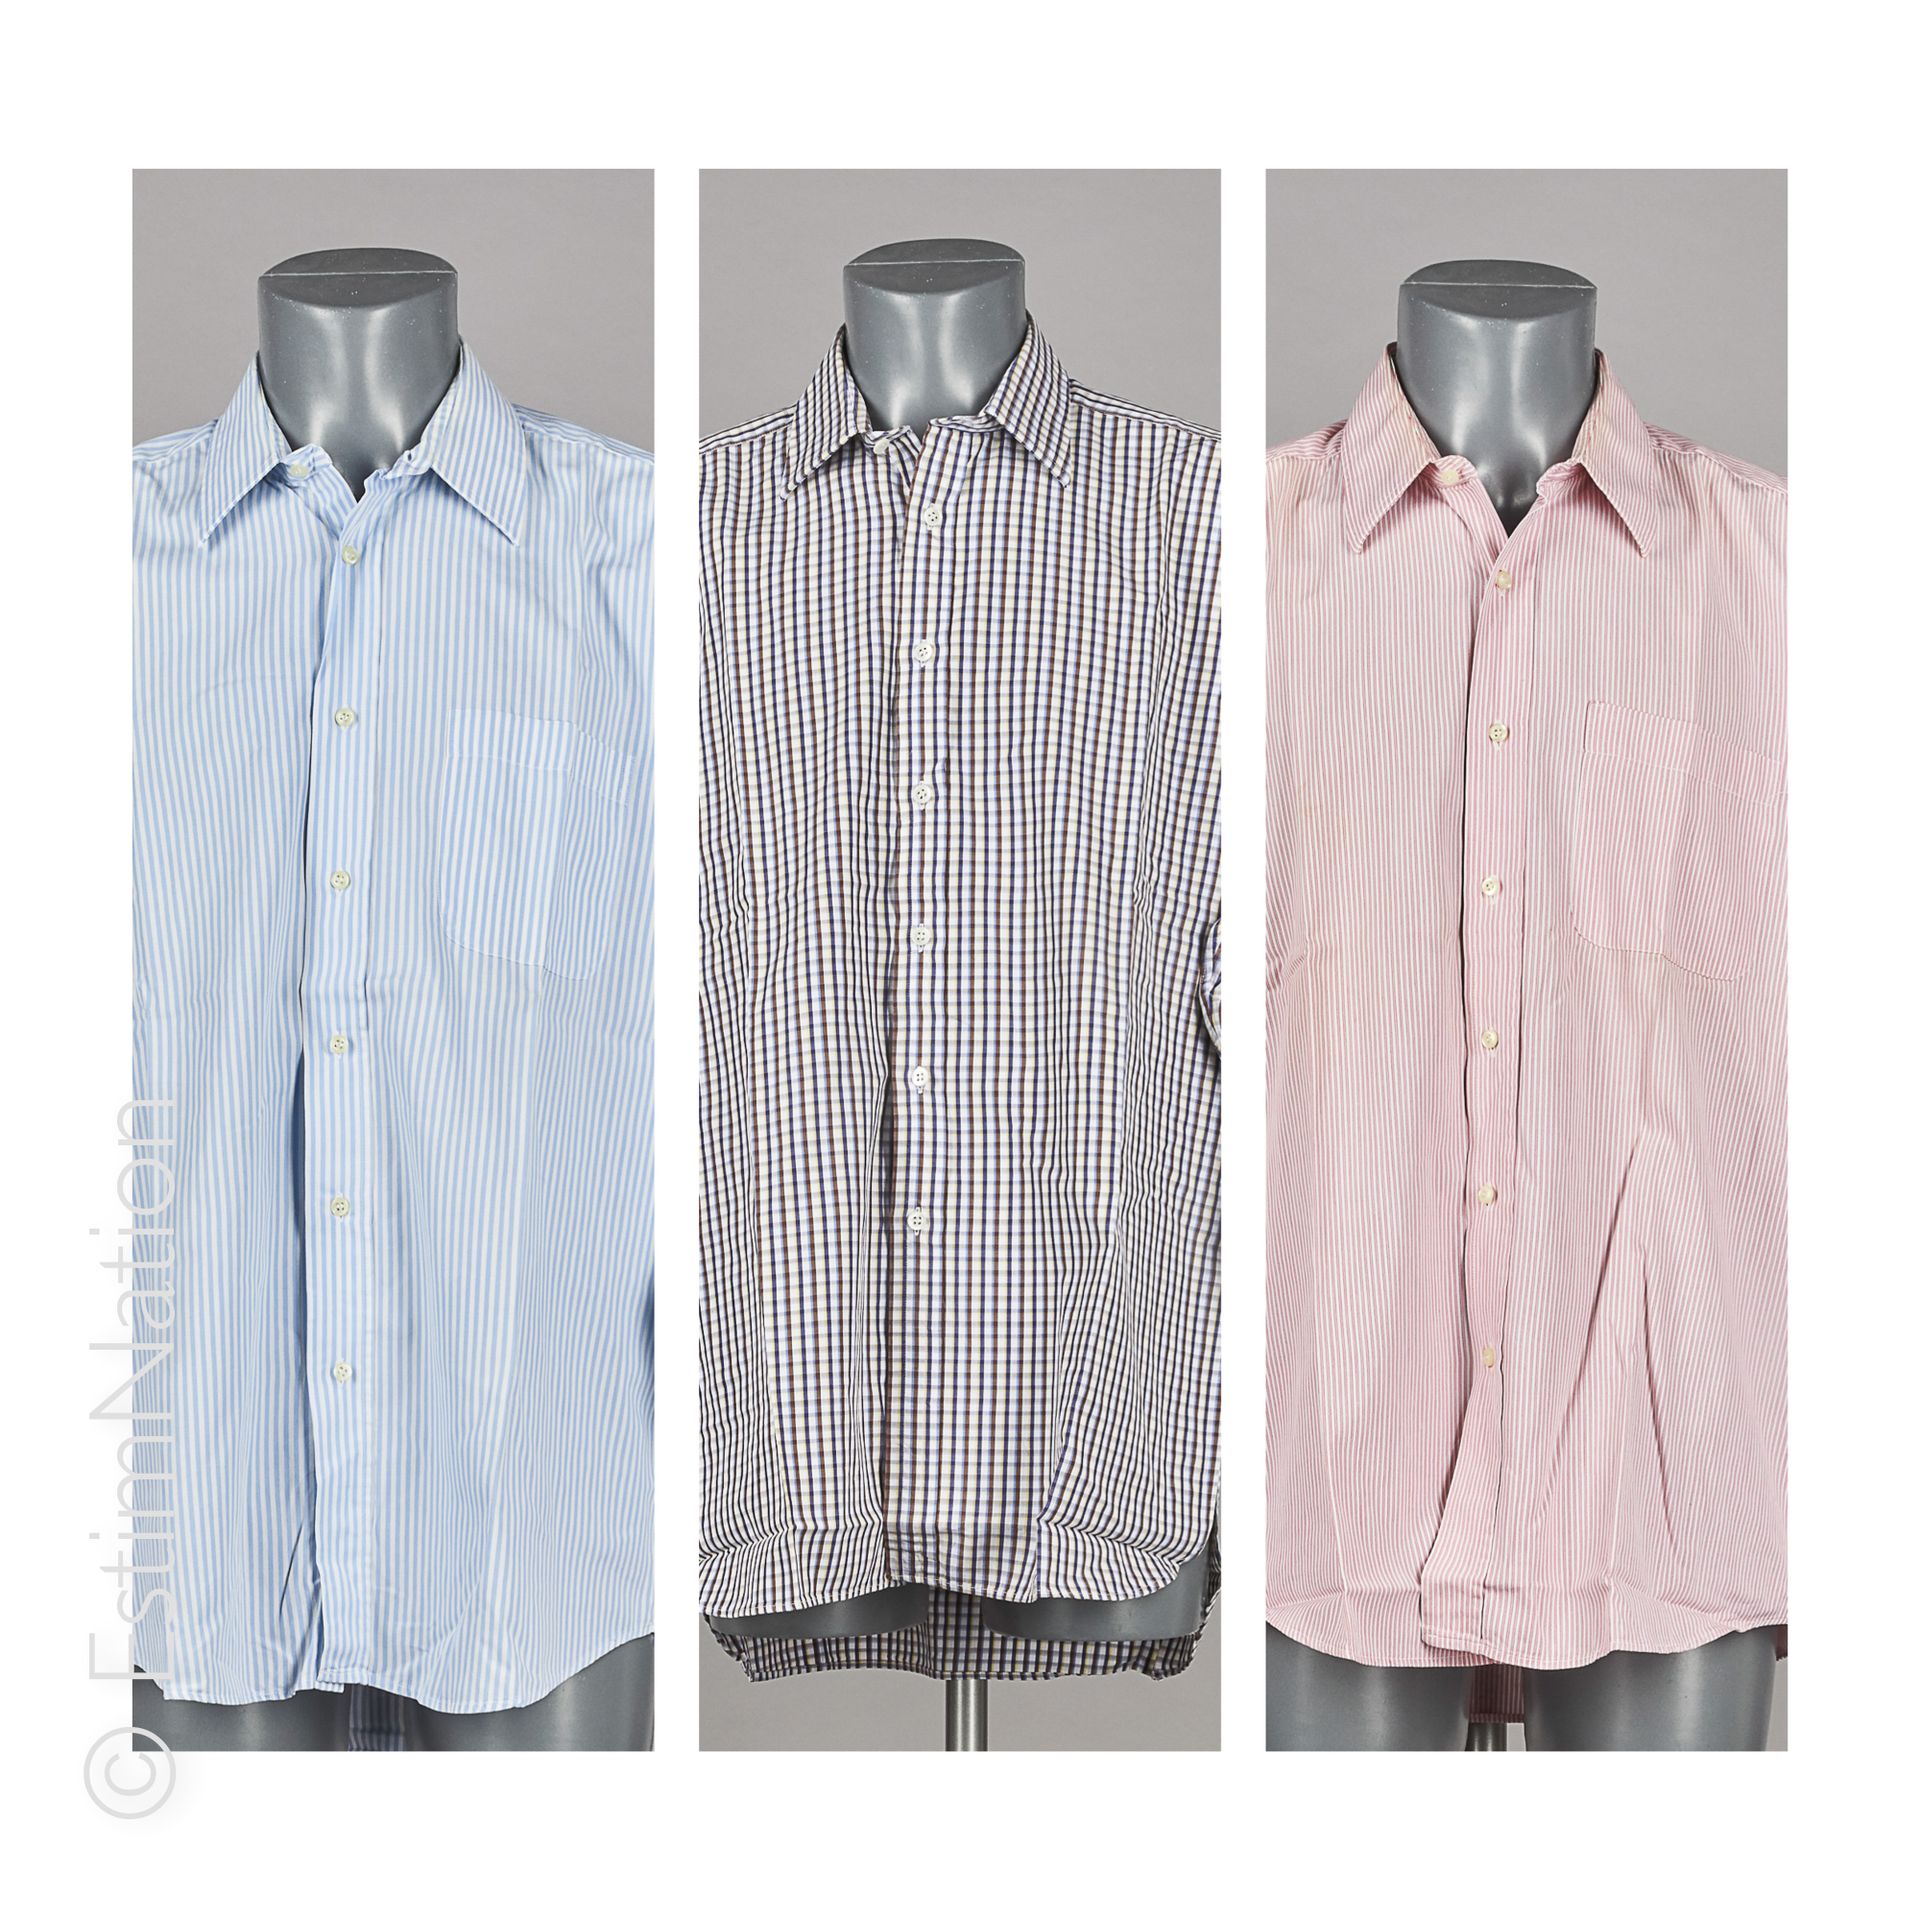 LANVIN CLASSIQUE, HILDITCH & KEY 四件棉质衬衫：三件条纹，一件格子（S 16 1/2 / 42）（不保证条件）。